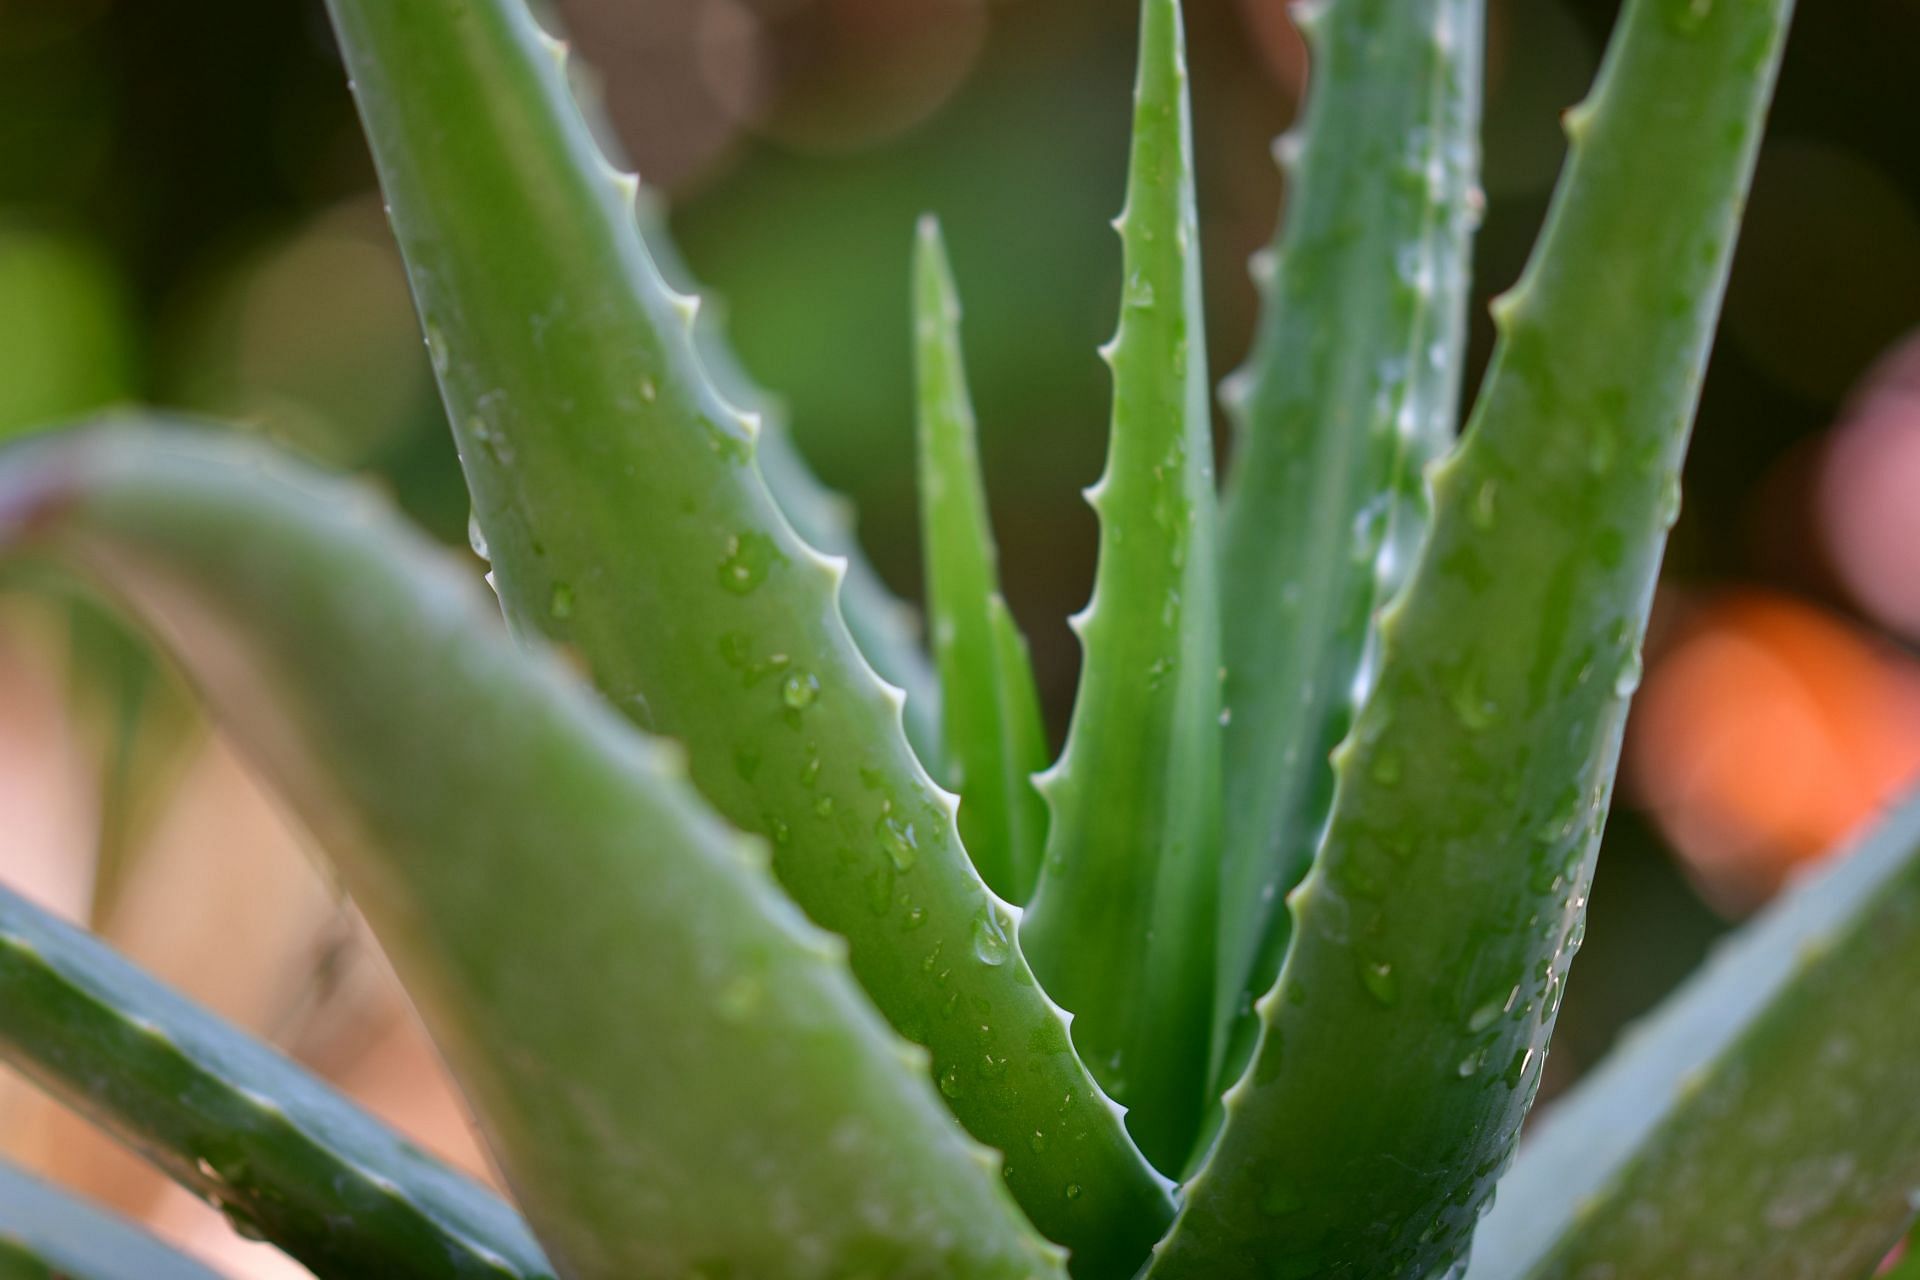 Aloe vera gel provides relief from sunburn. (Image via Unsplash/ Pisauikan)